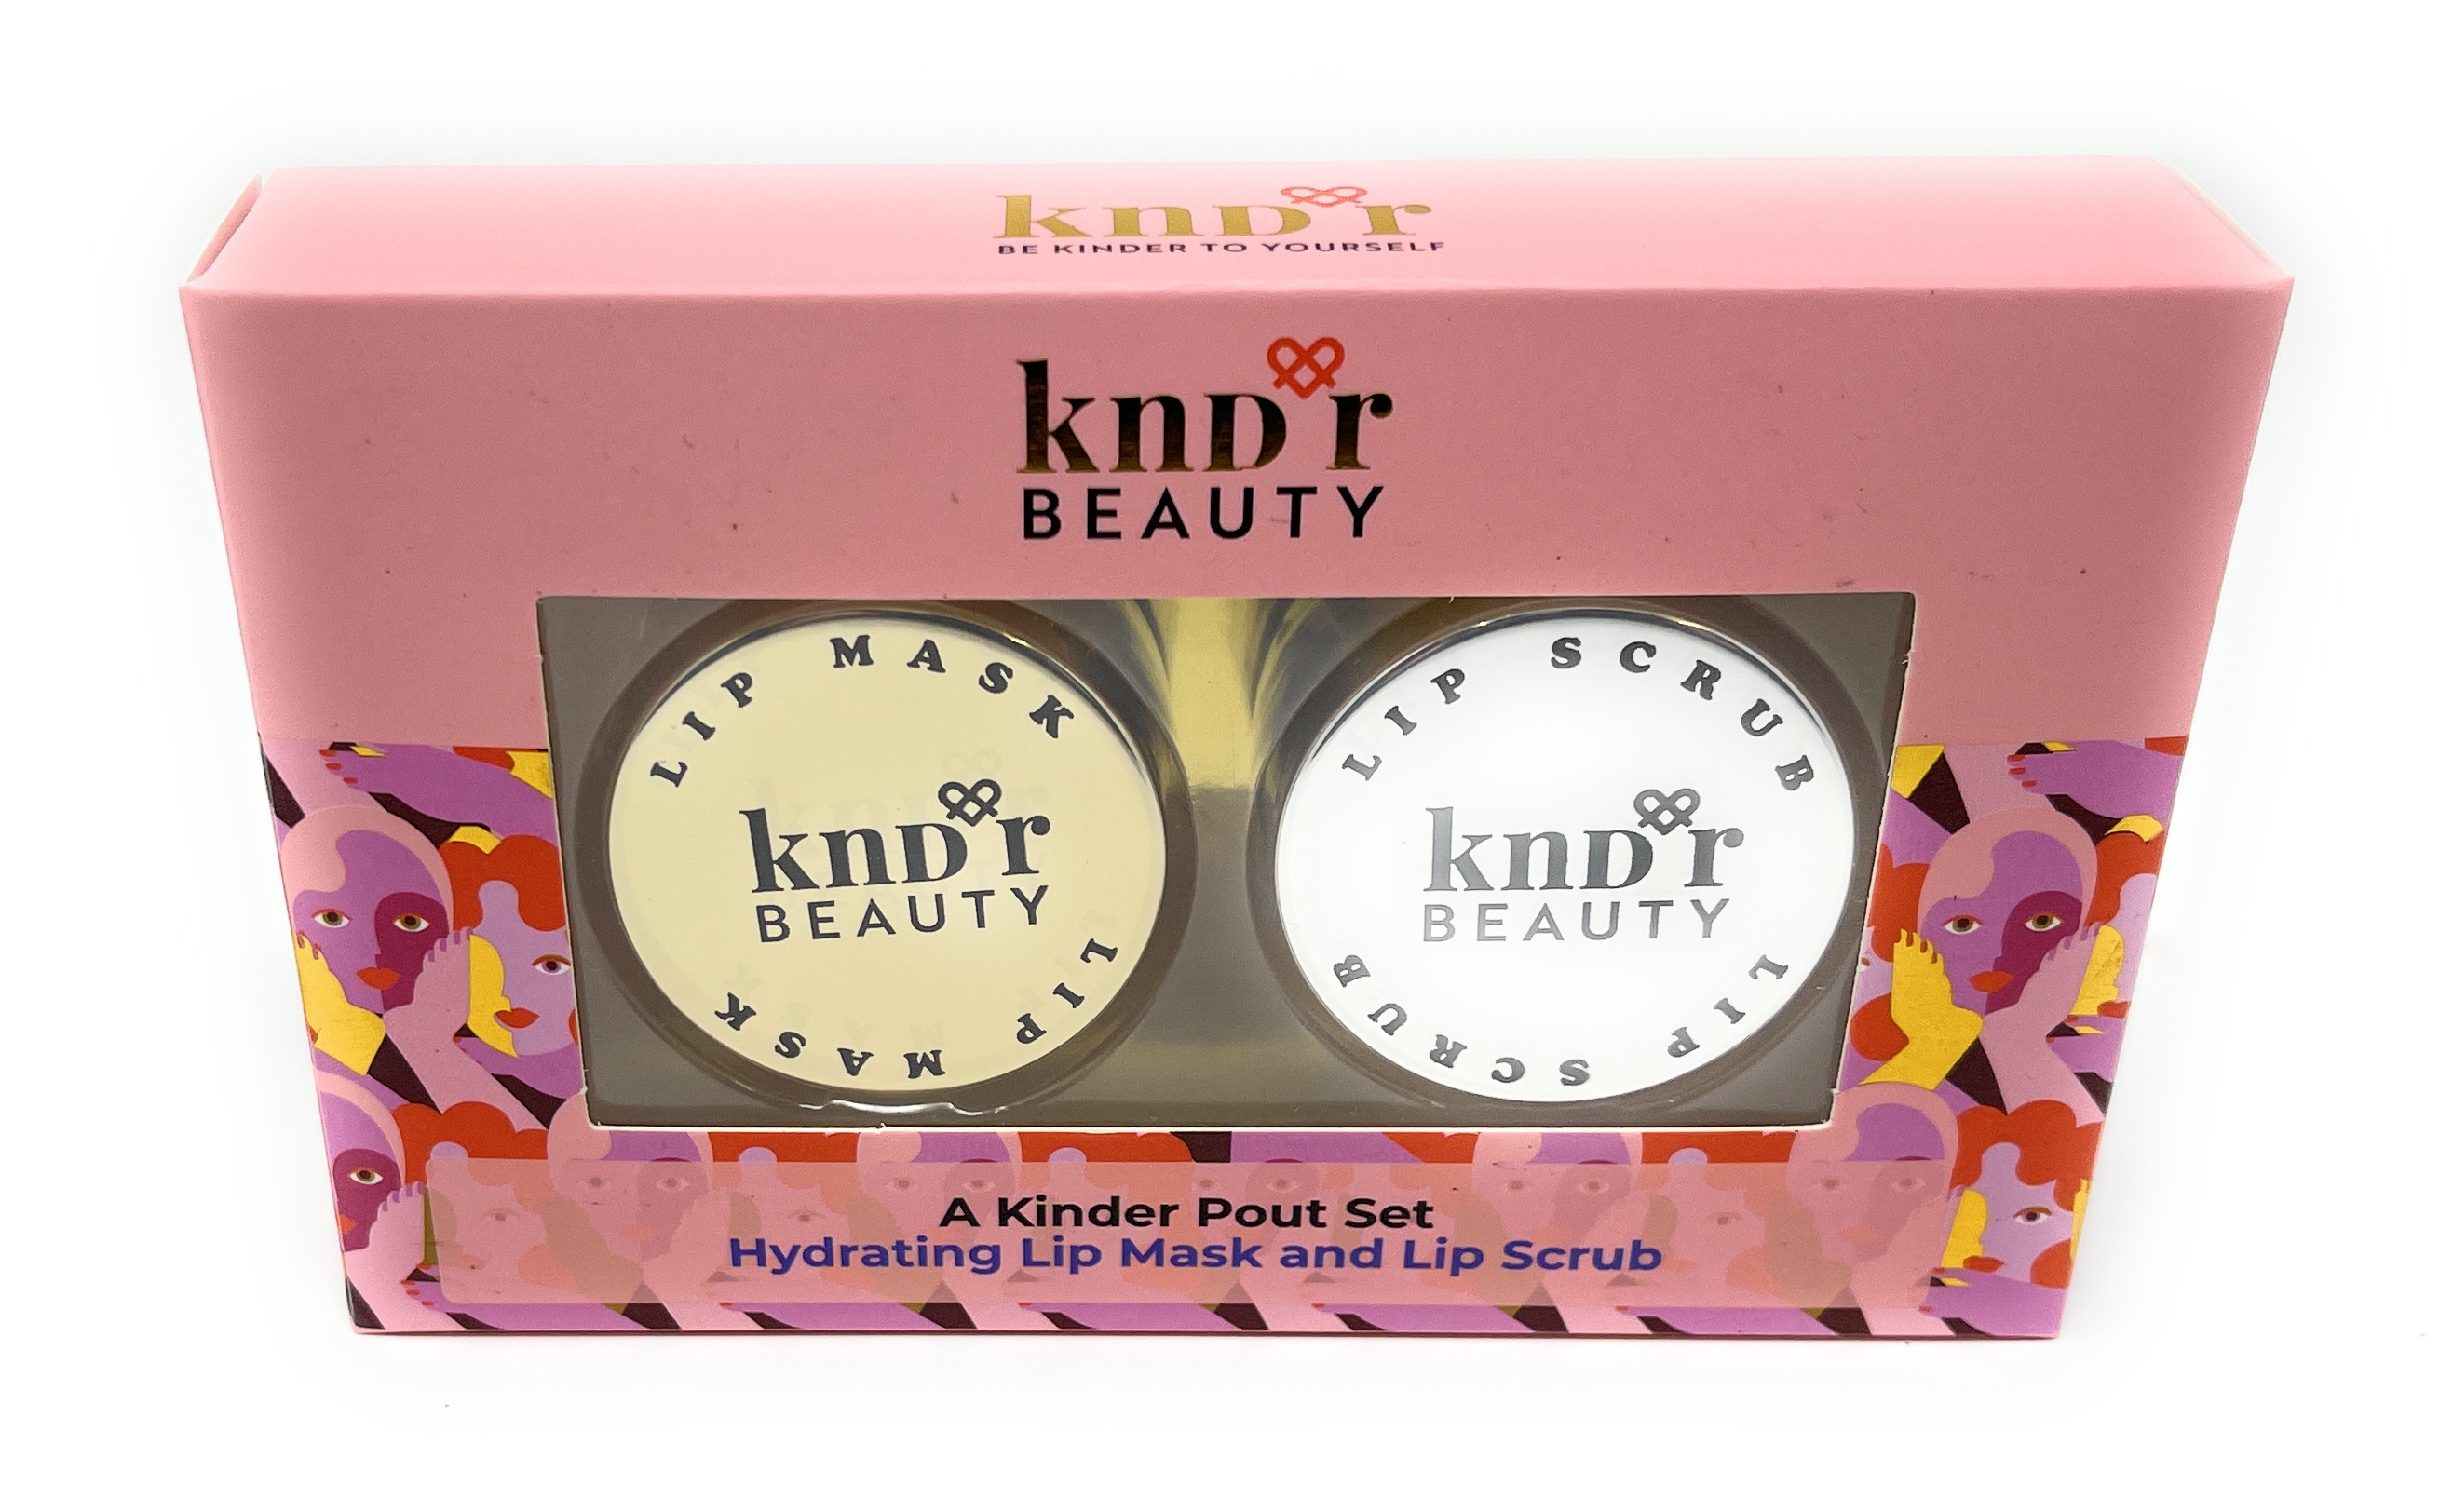 Wholesale Lot of 96 x KNDR Beauty Lip Mask and Lip Scrub A Kinder Pout Set